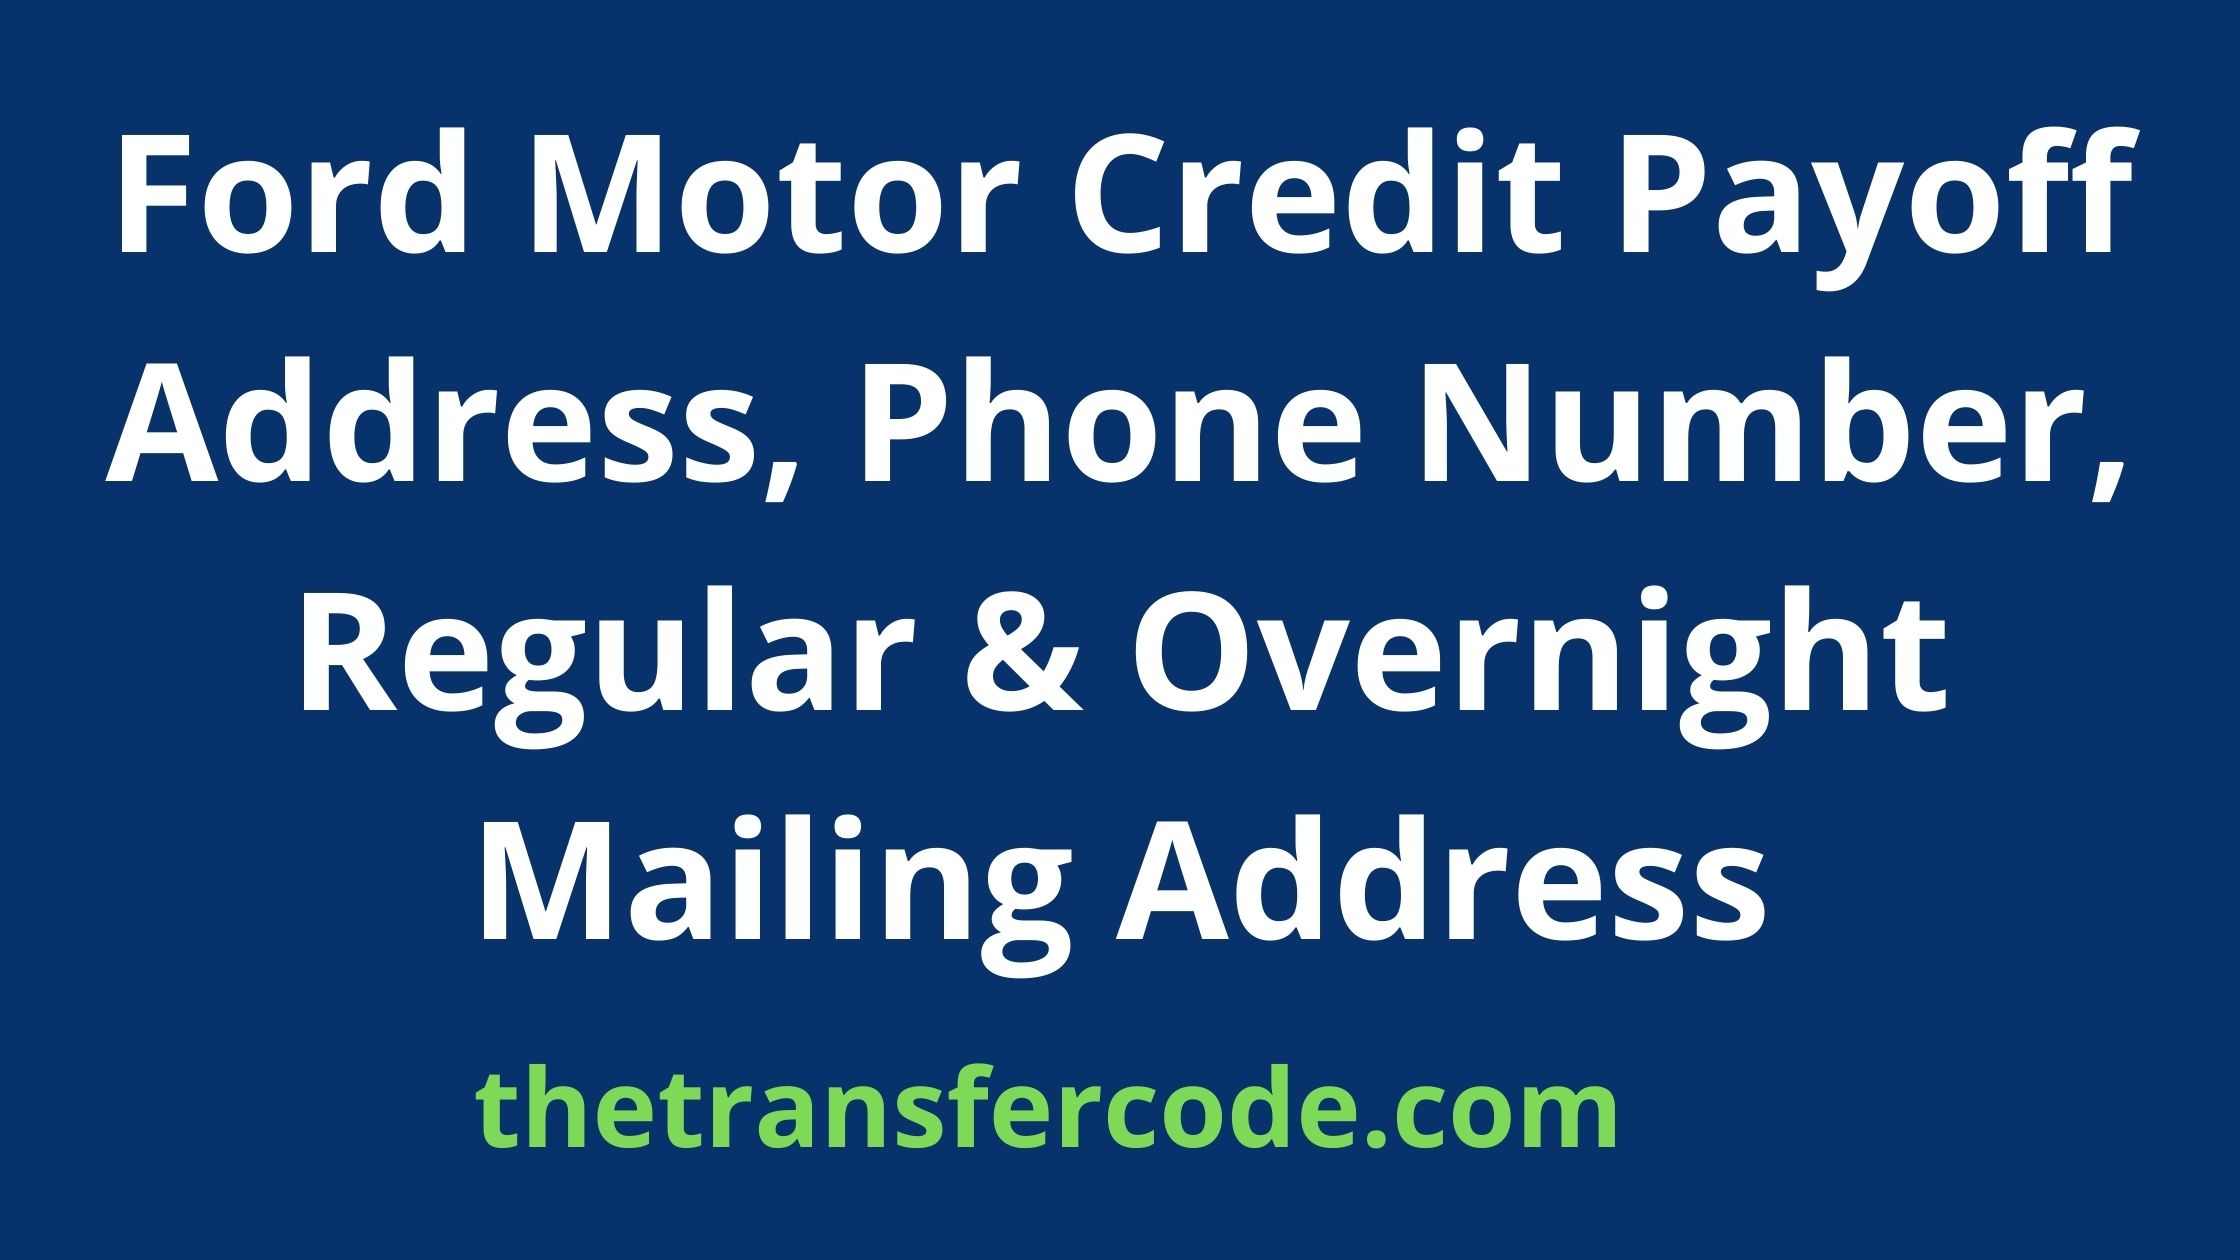 Ford Motor Credit Payoff Address, 2022, Phone Number, Regular